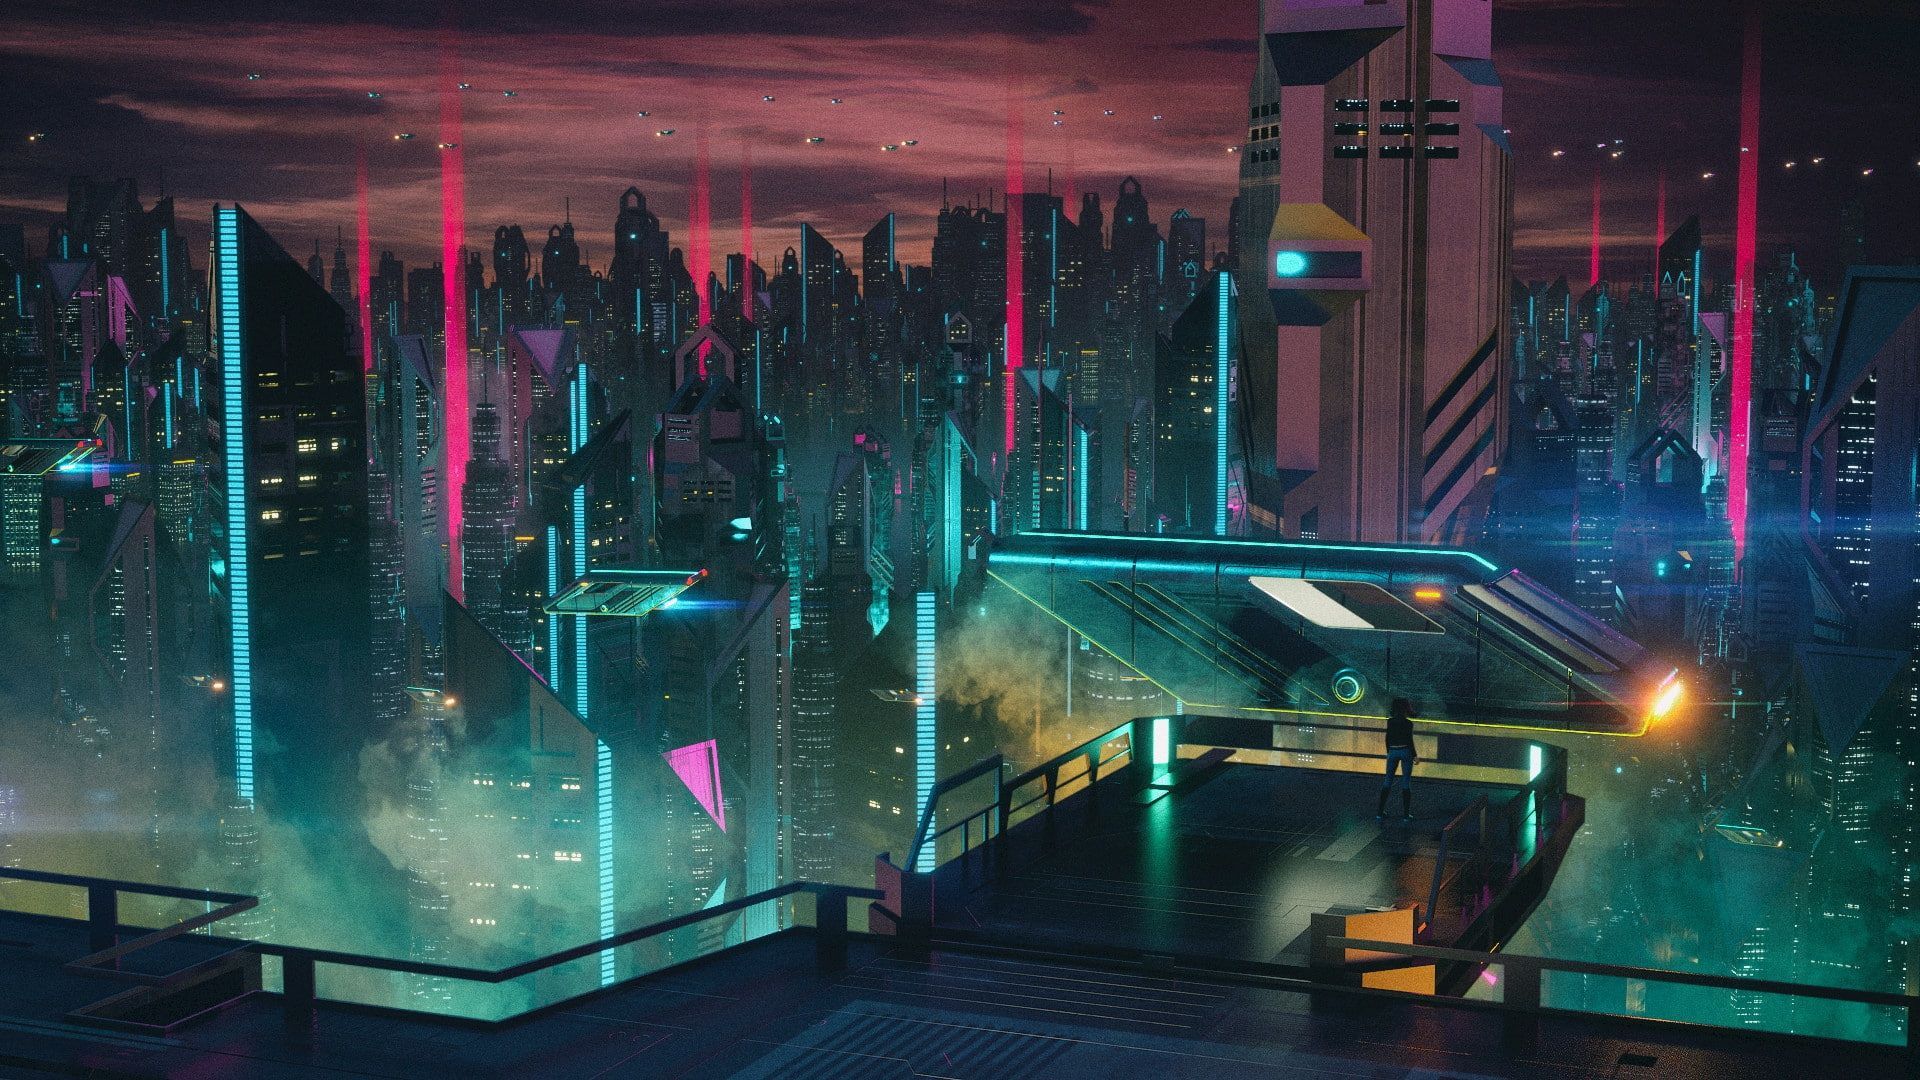 Music The city #Skyscrapers #Fiction #Cyber #Cyberpunk #Synth #Retrowave #Synthwave New Retro Wave #Futuresyn. Futuristic city, City illustration, Cyberpunk city